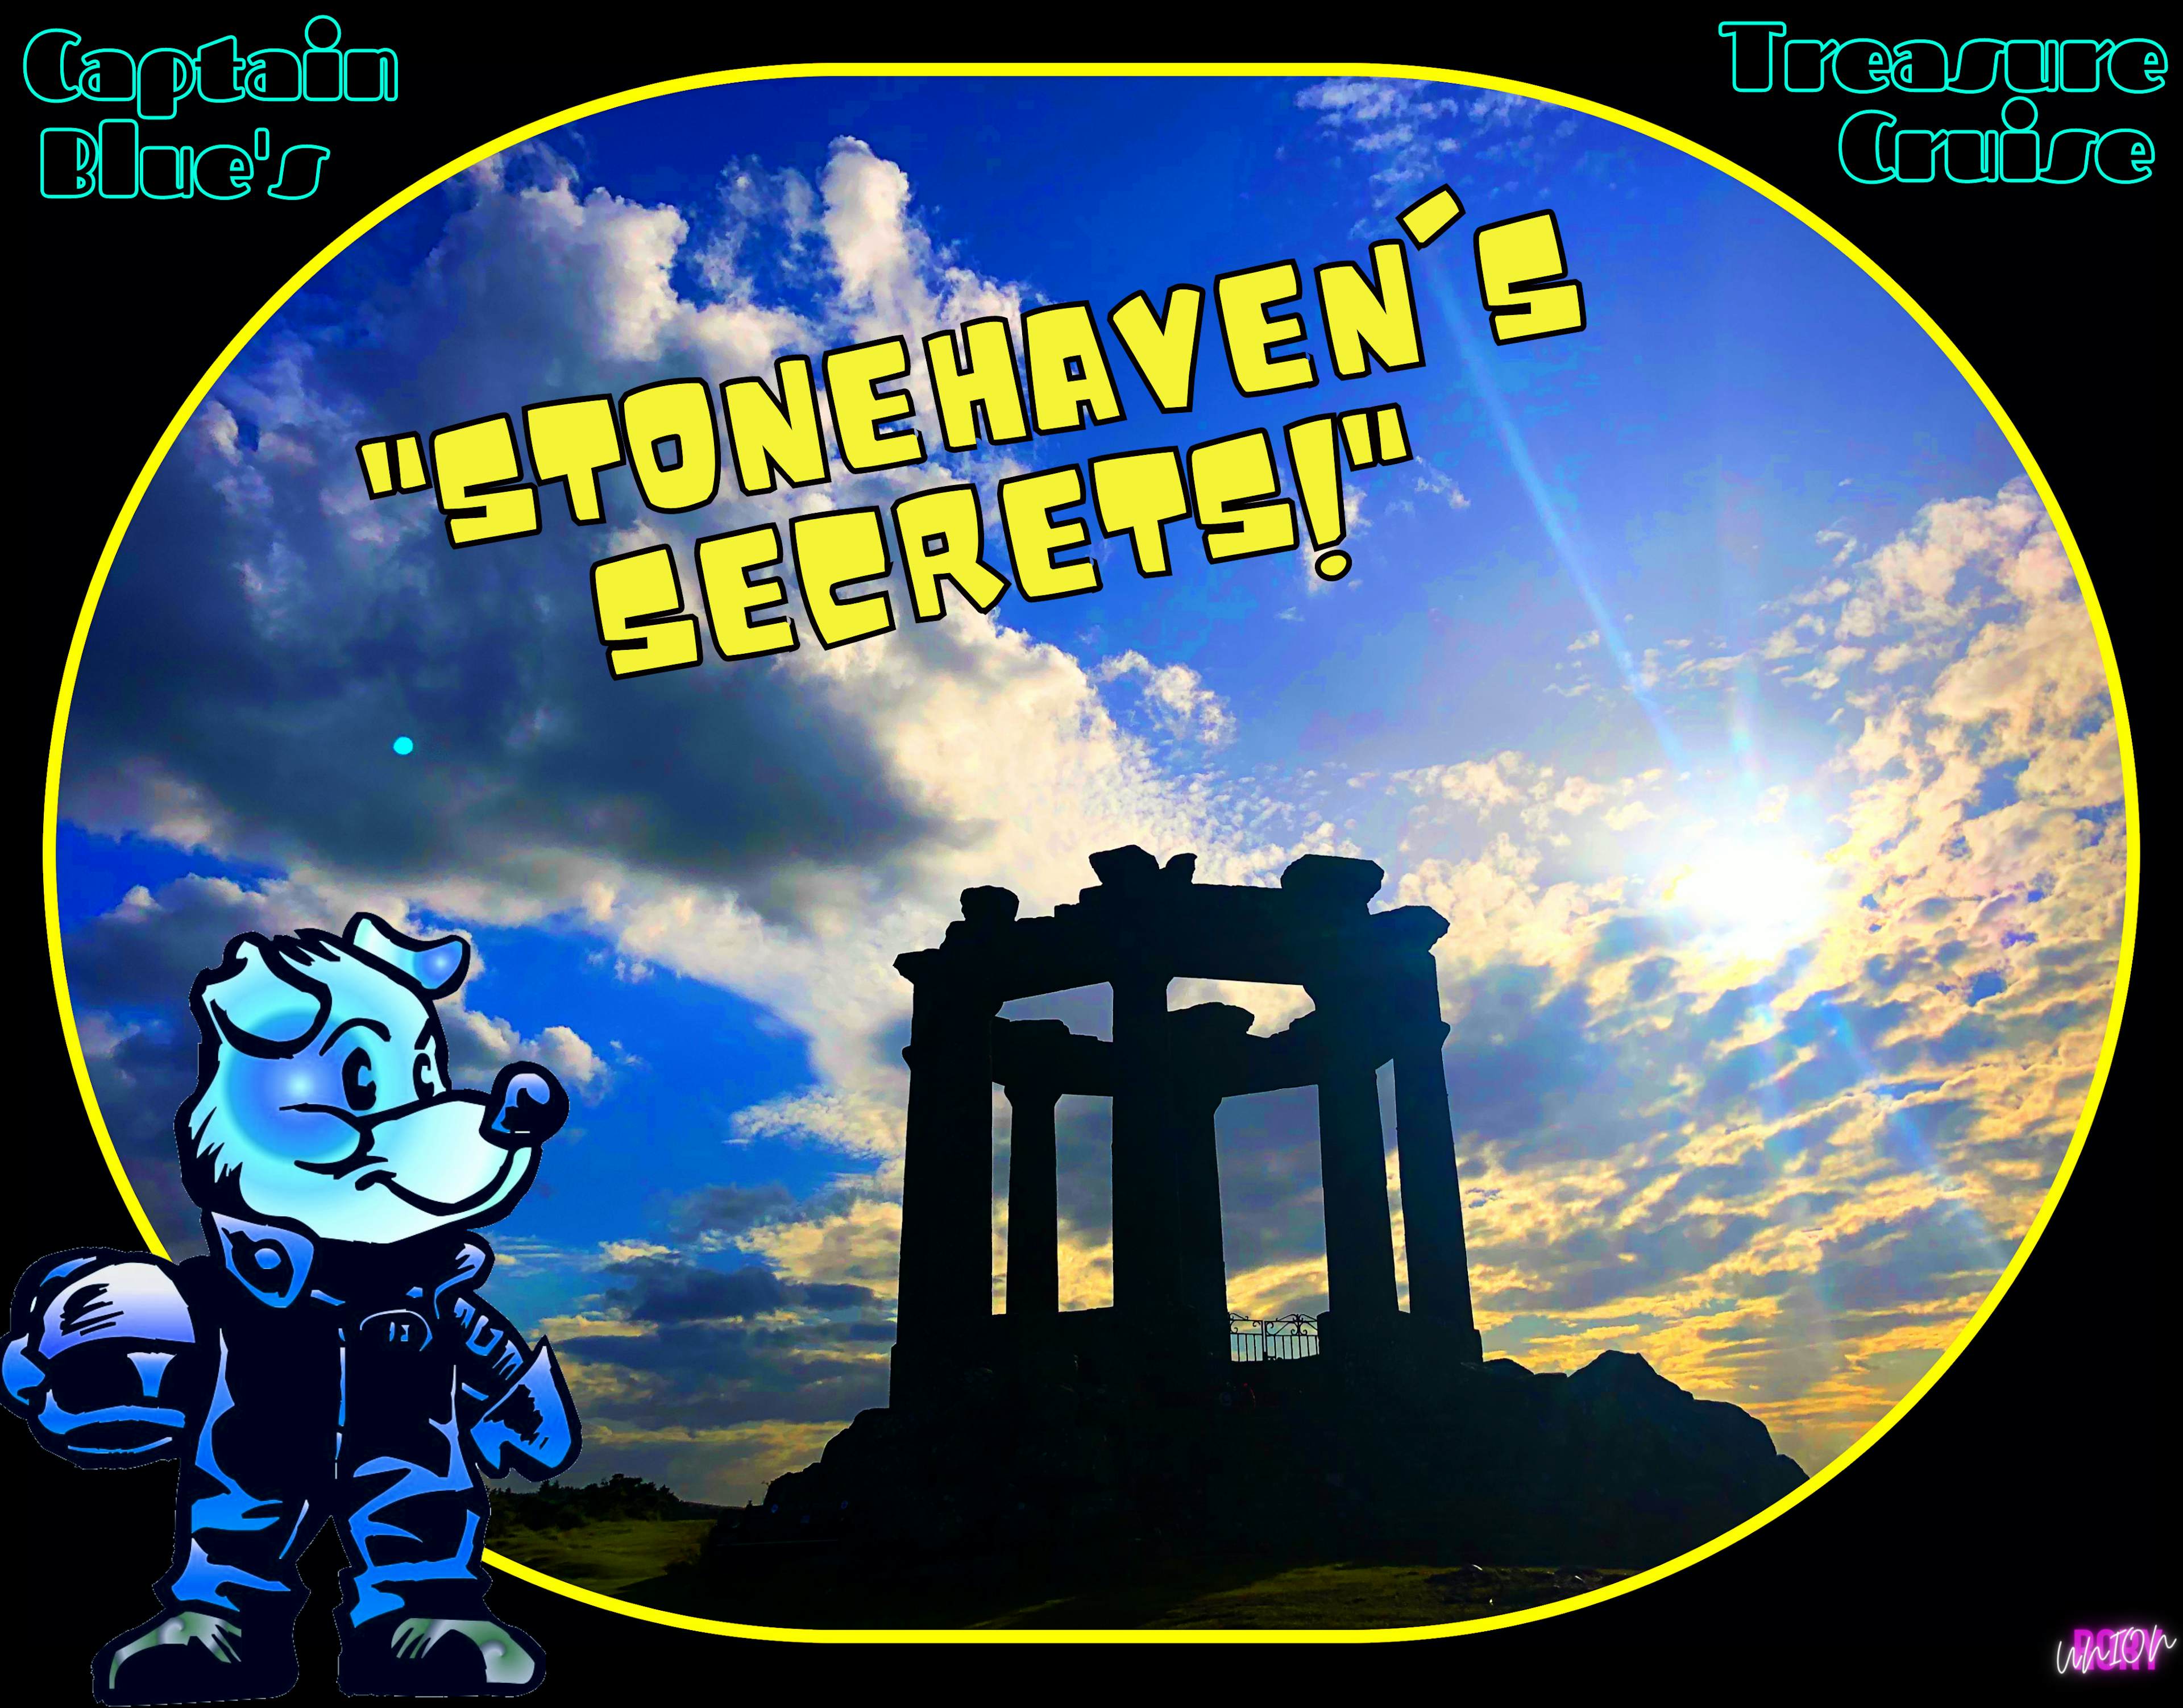 Captain Blue's Treasure Cruise : Stonehaven's Secrets!